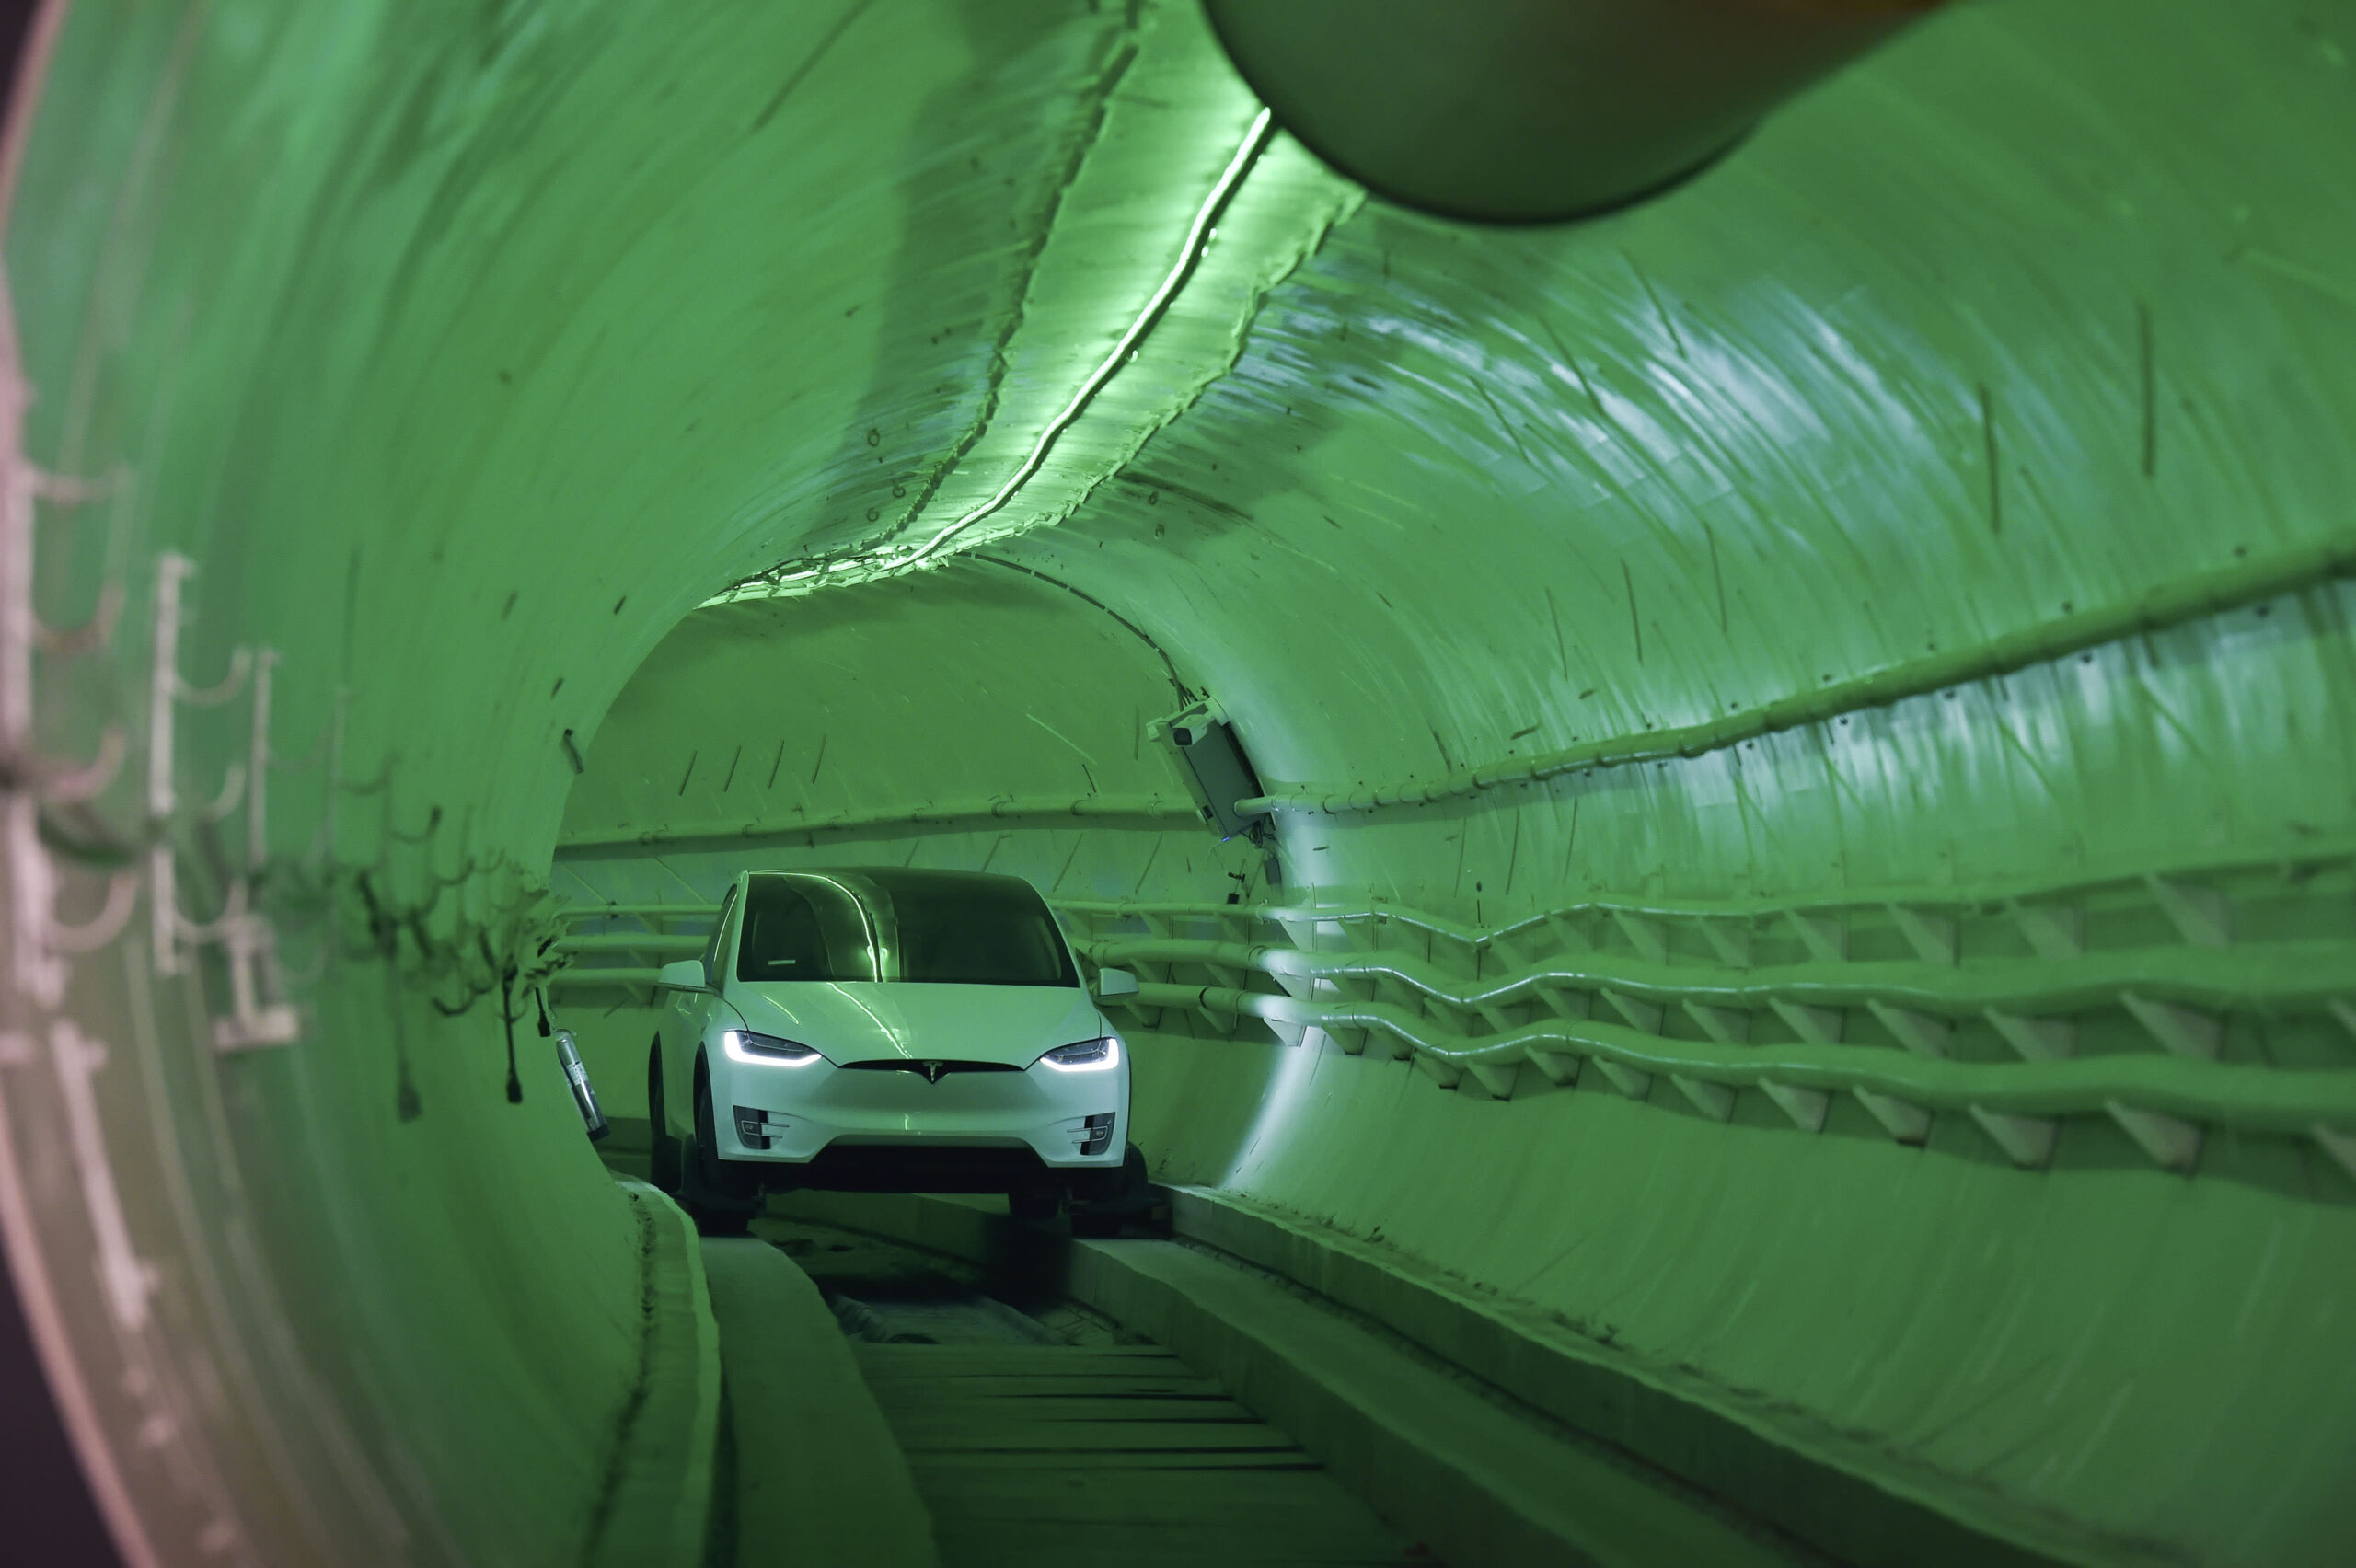 Boring tunnel company starts test operations under Las Vegas